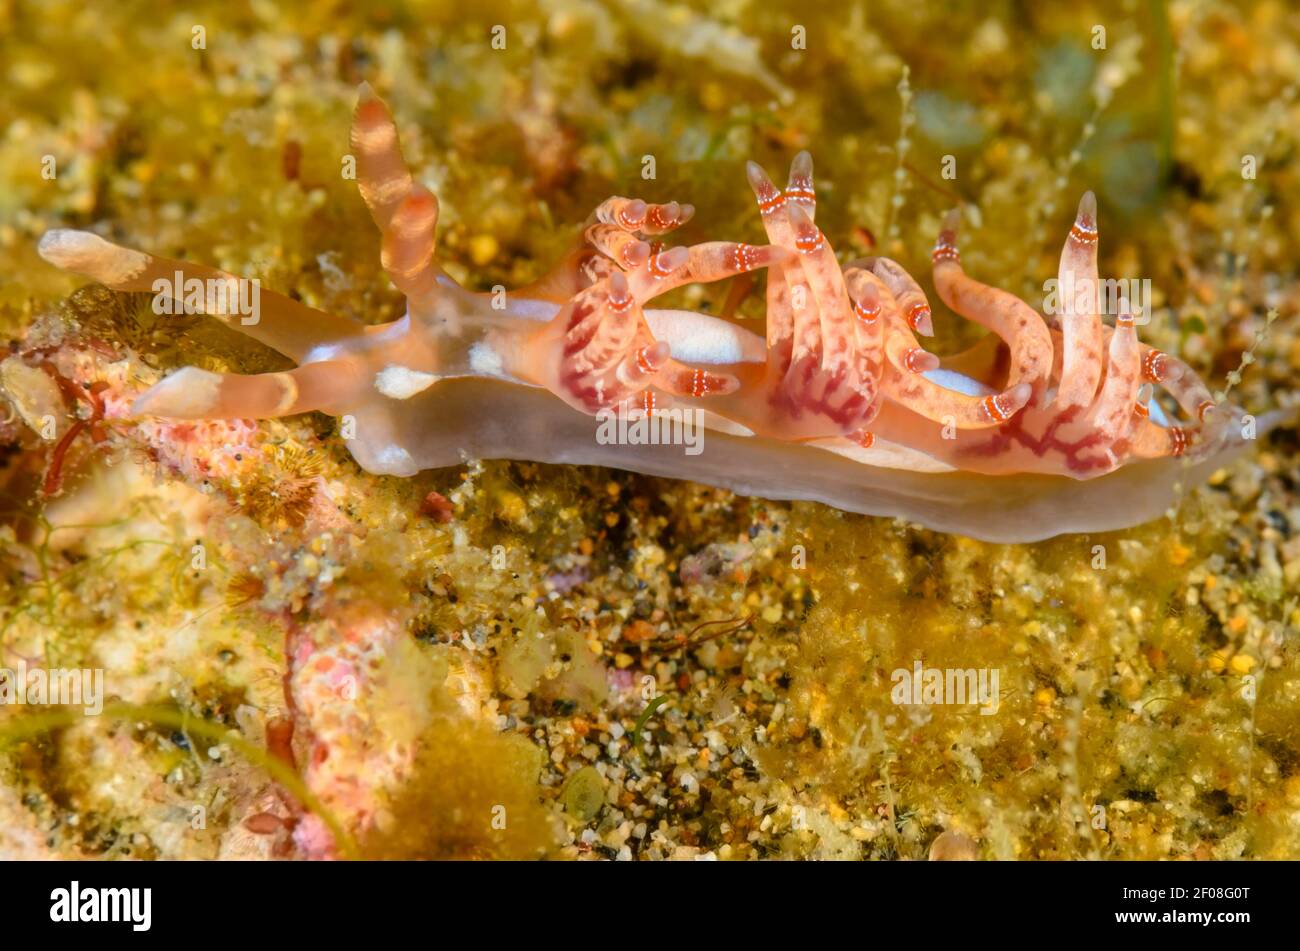 Sea slug or nudibranch, Samla bilas, Anilao, Batangas, Philippines, Pacific Stock Photo